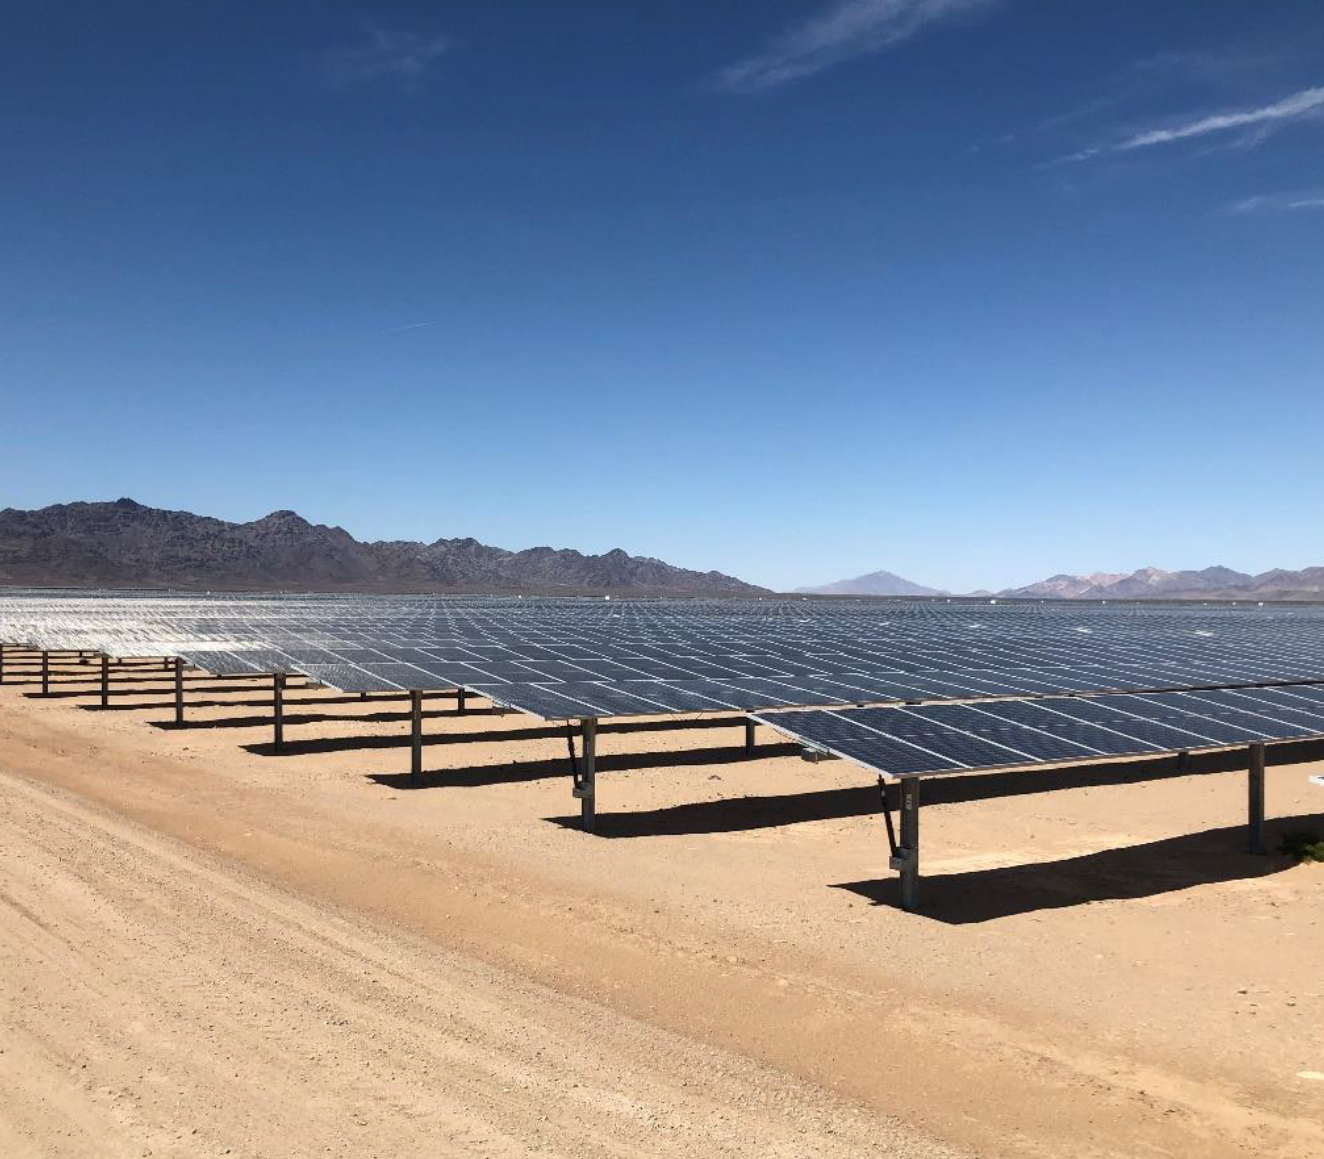 Desert field with solar pannels